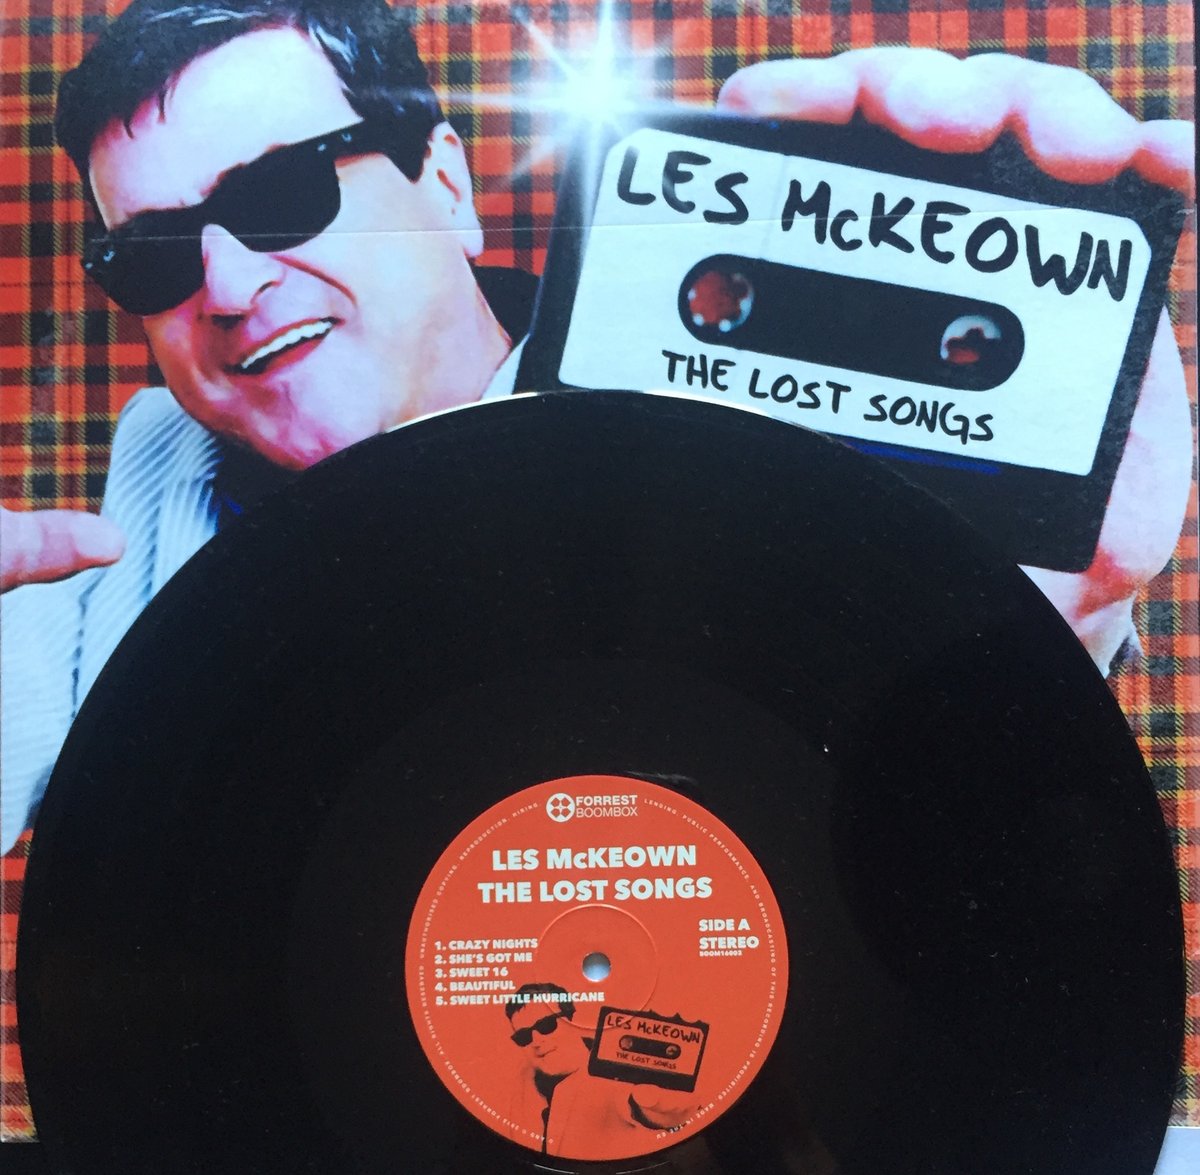 Image of Les McKeown's 'The Lost Songs' on Vinyl LP